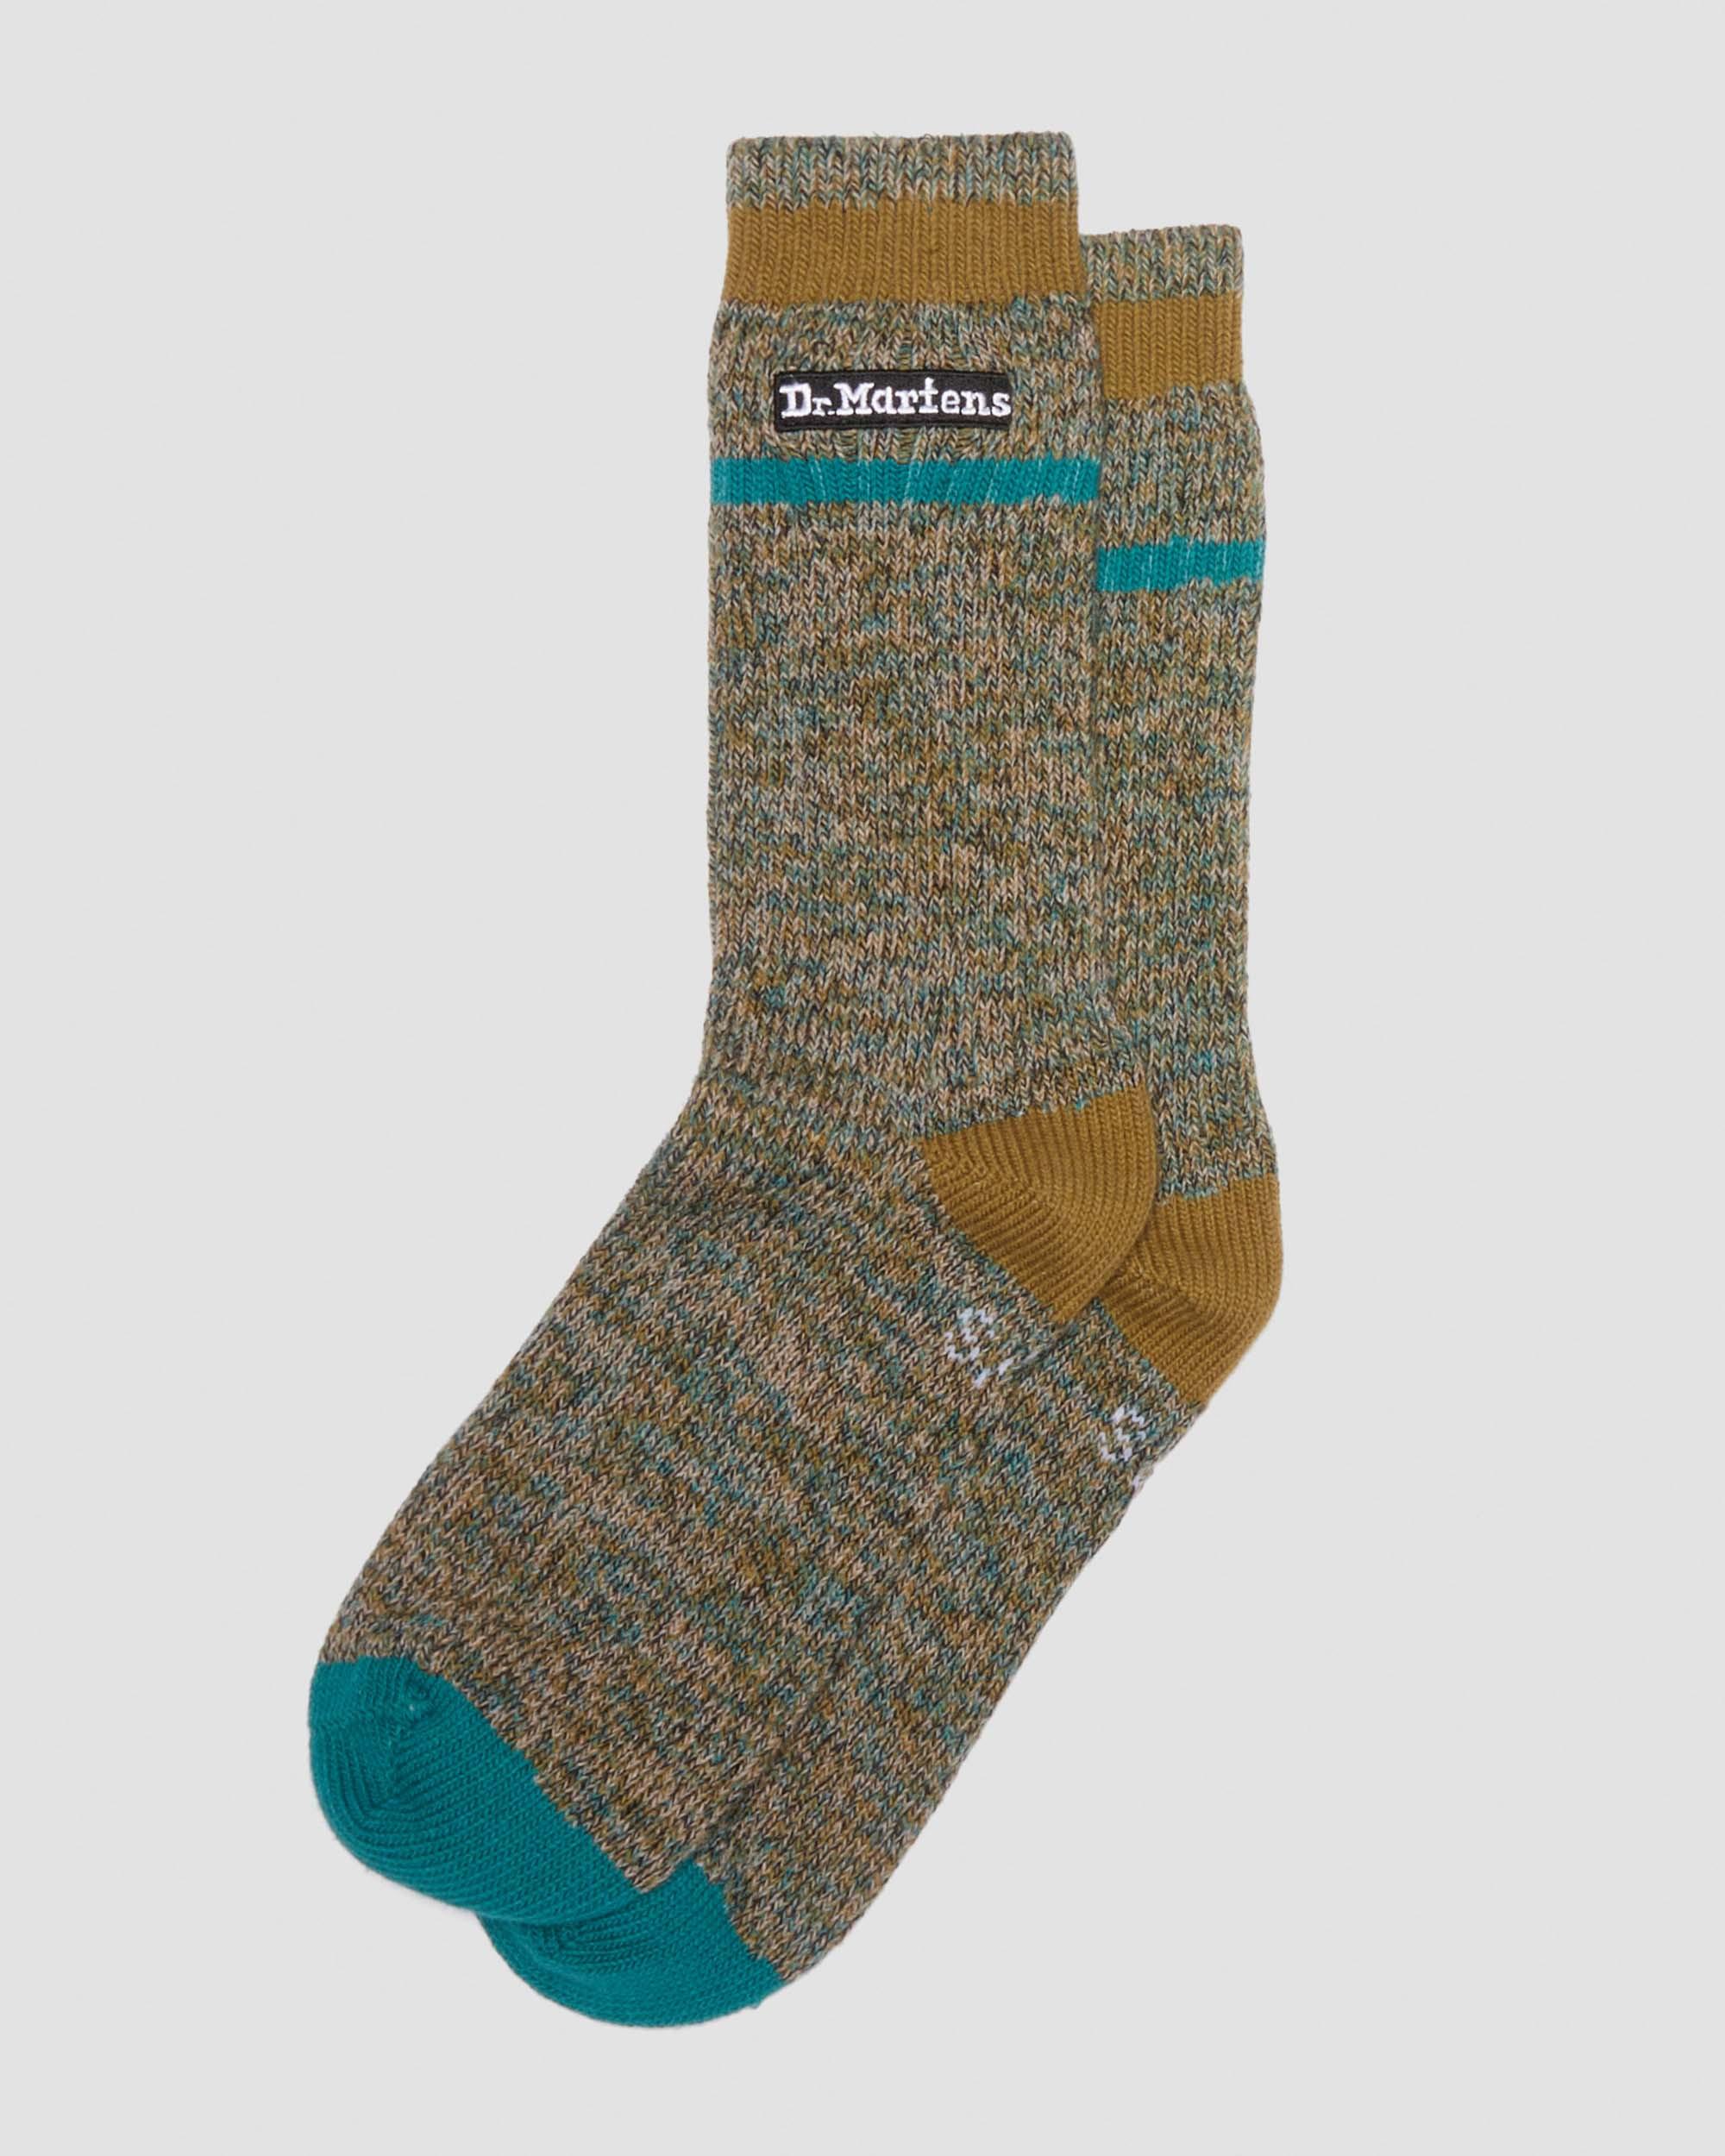 Marl Organic | Martens Taupe Vintage Socks in Dr